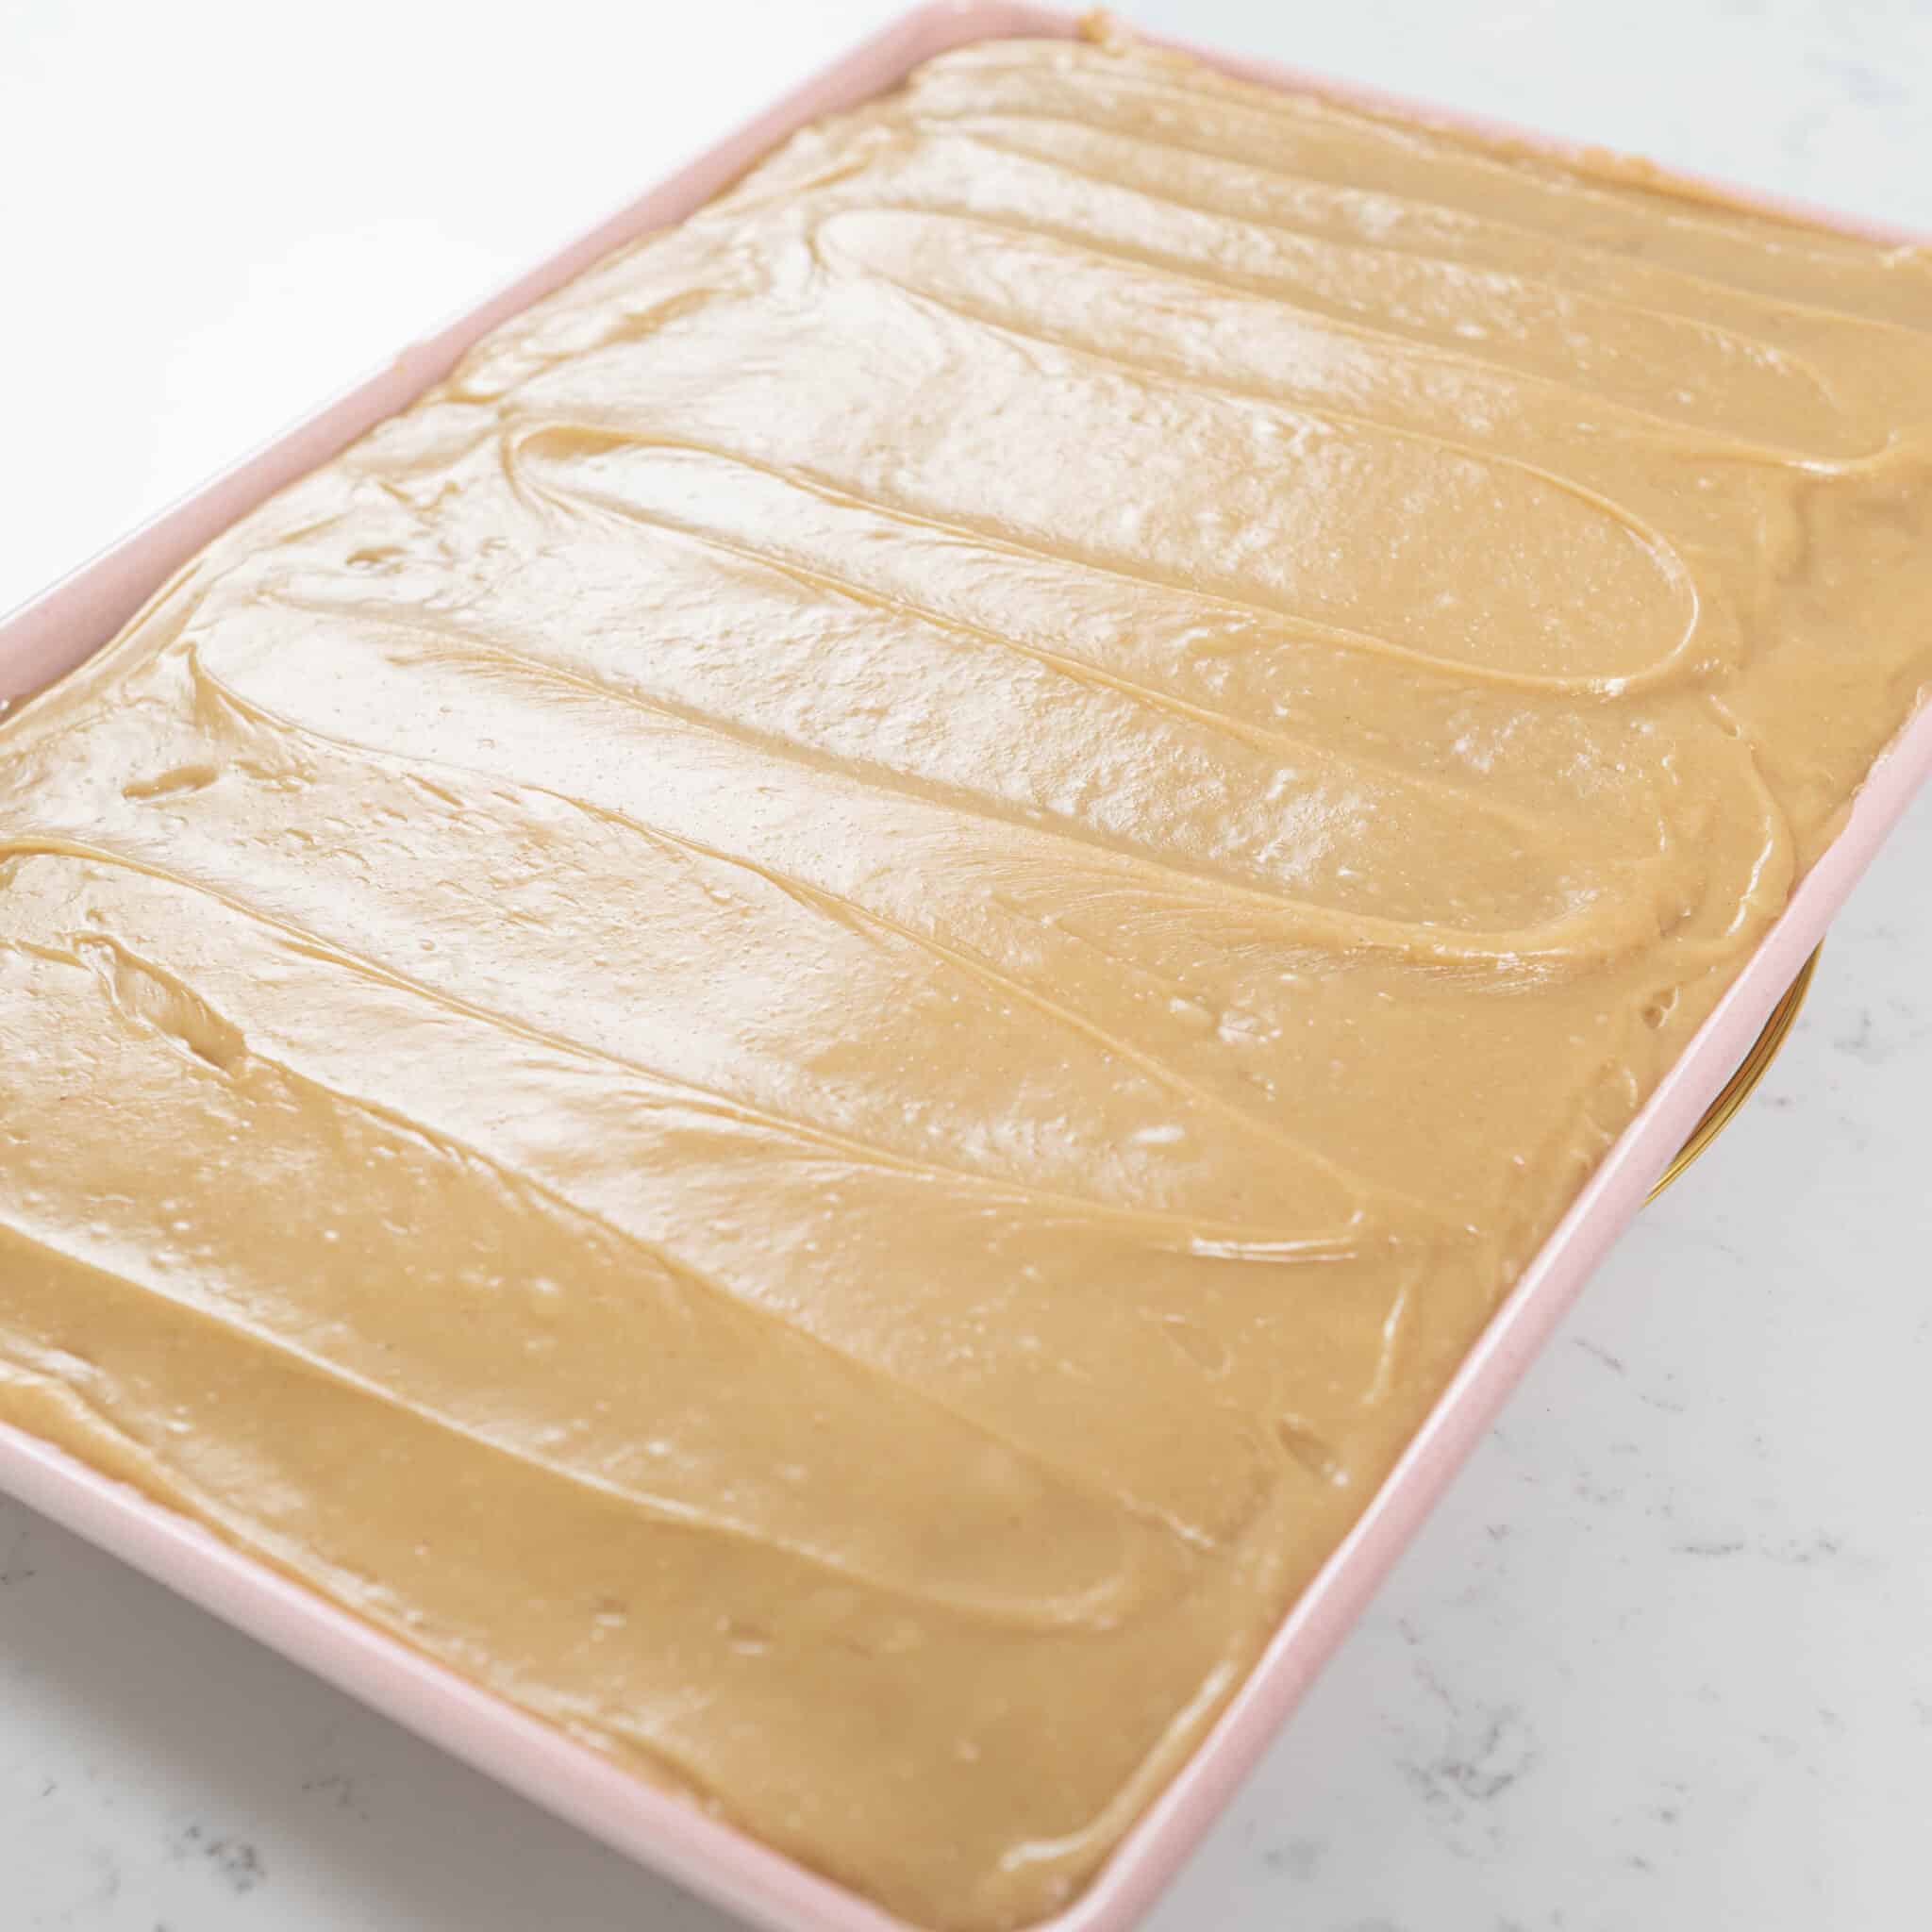 peanut butter texas sheet cake in a pink pan